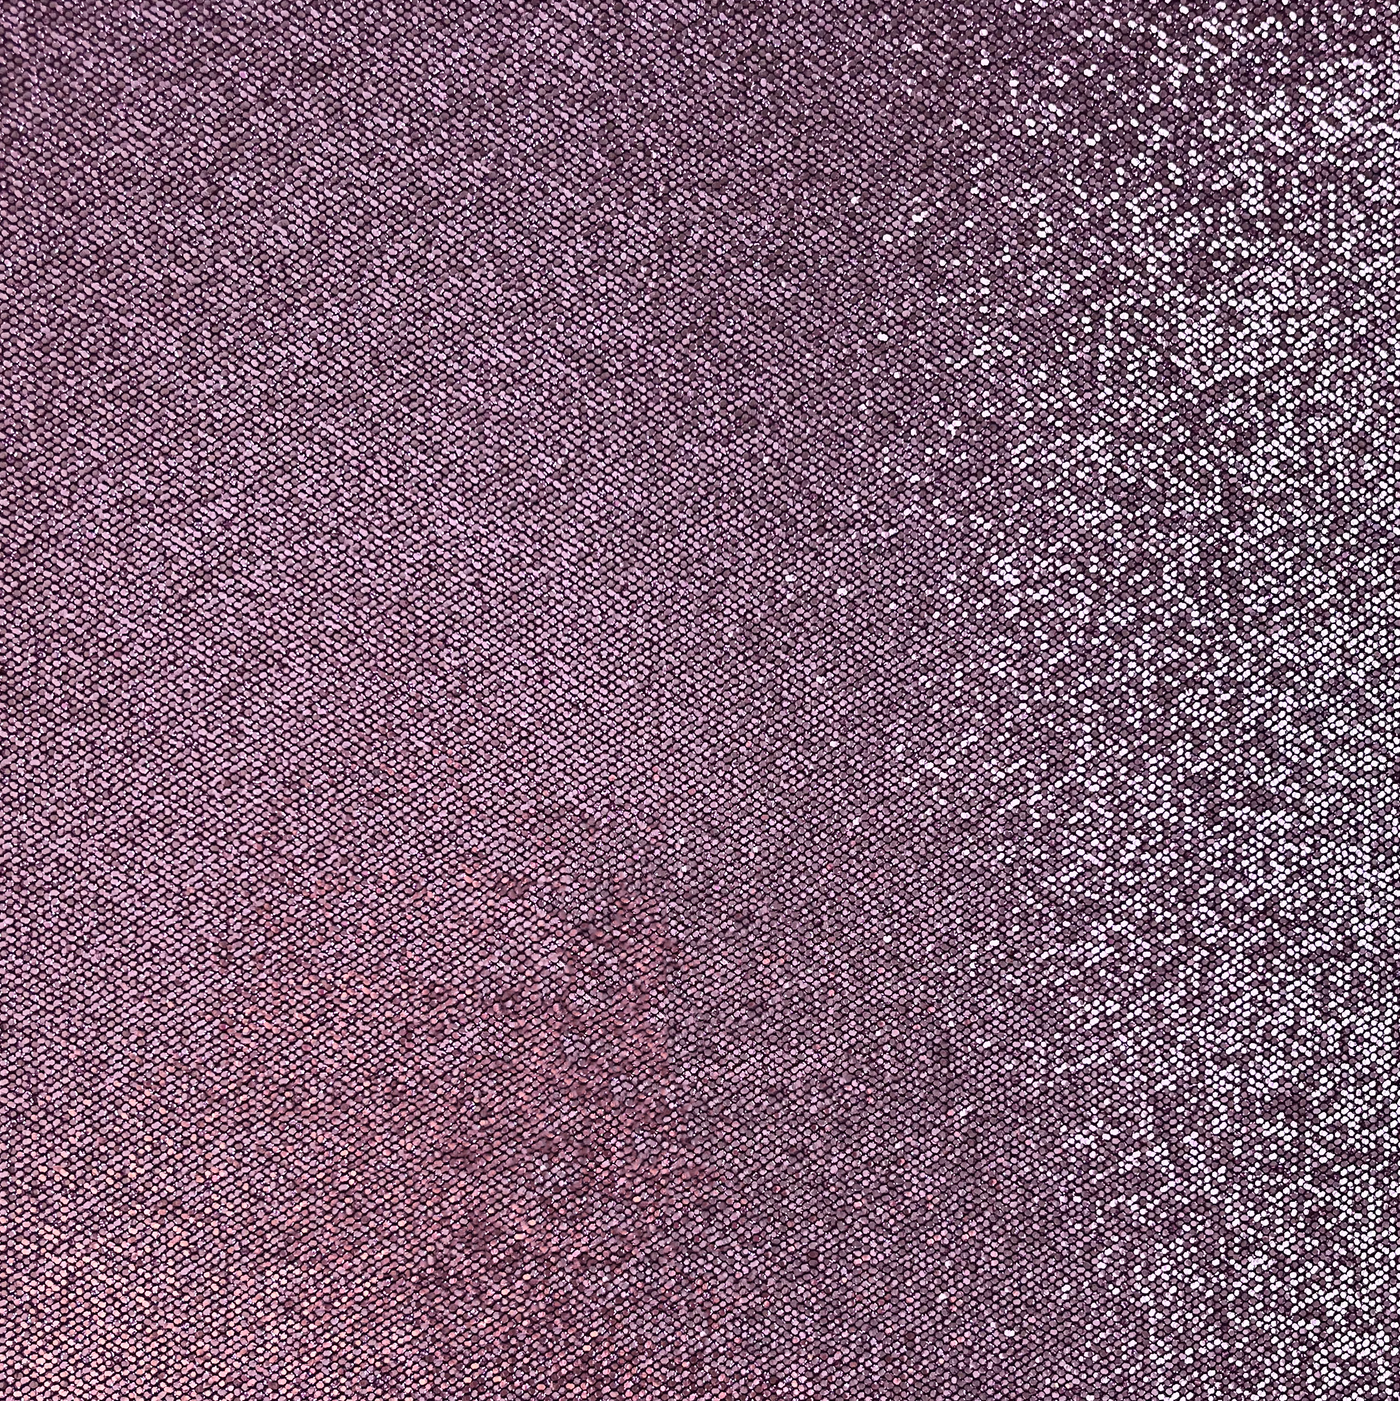 LILAC Sequin Glitter Cardstock - pink disco ball glitter 